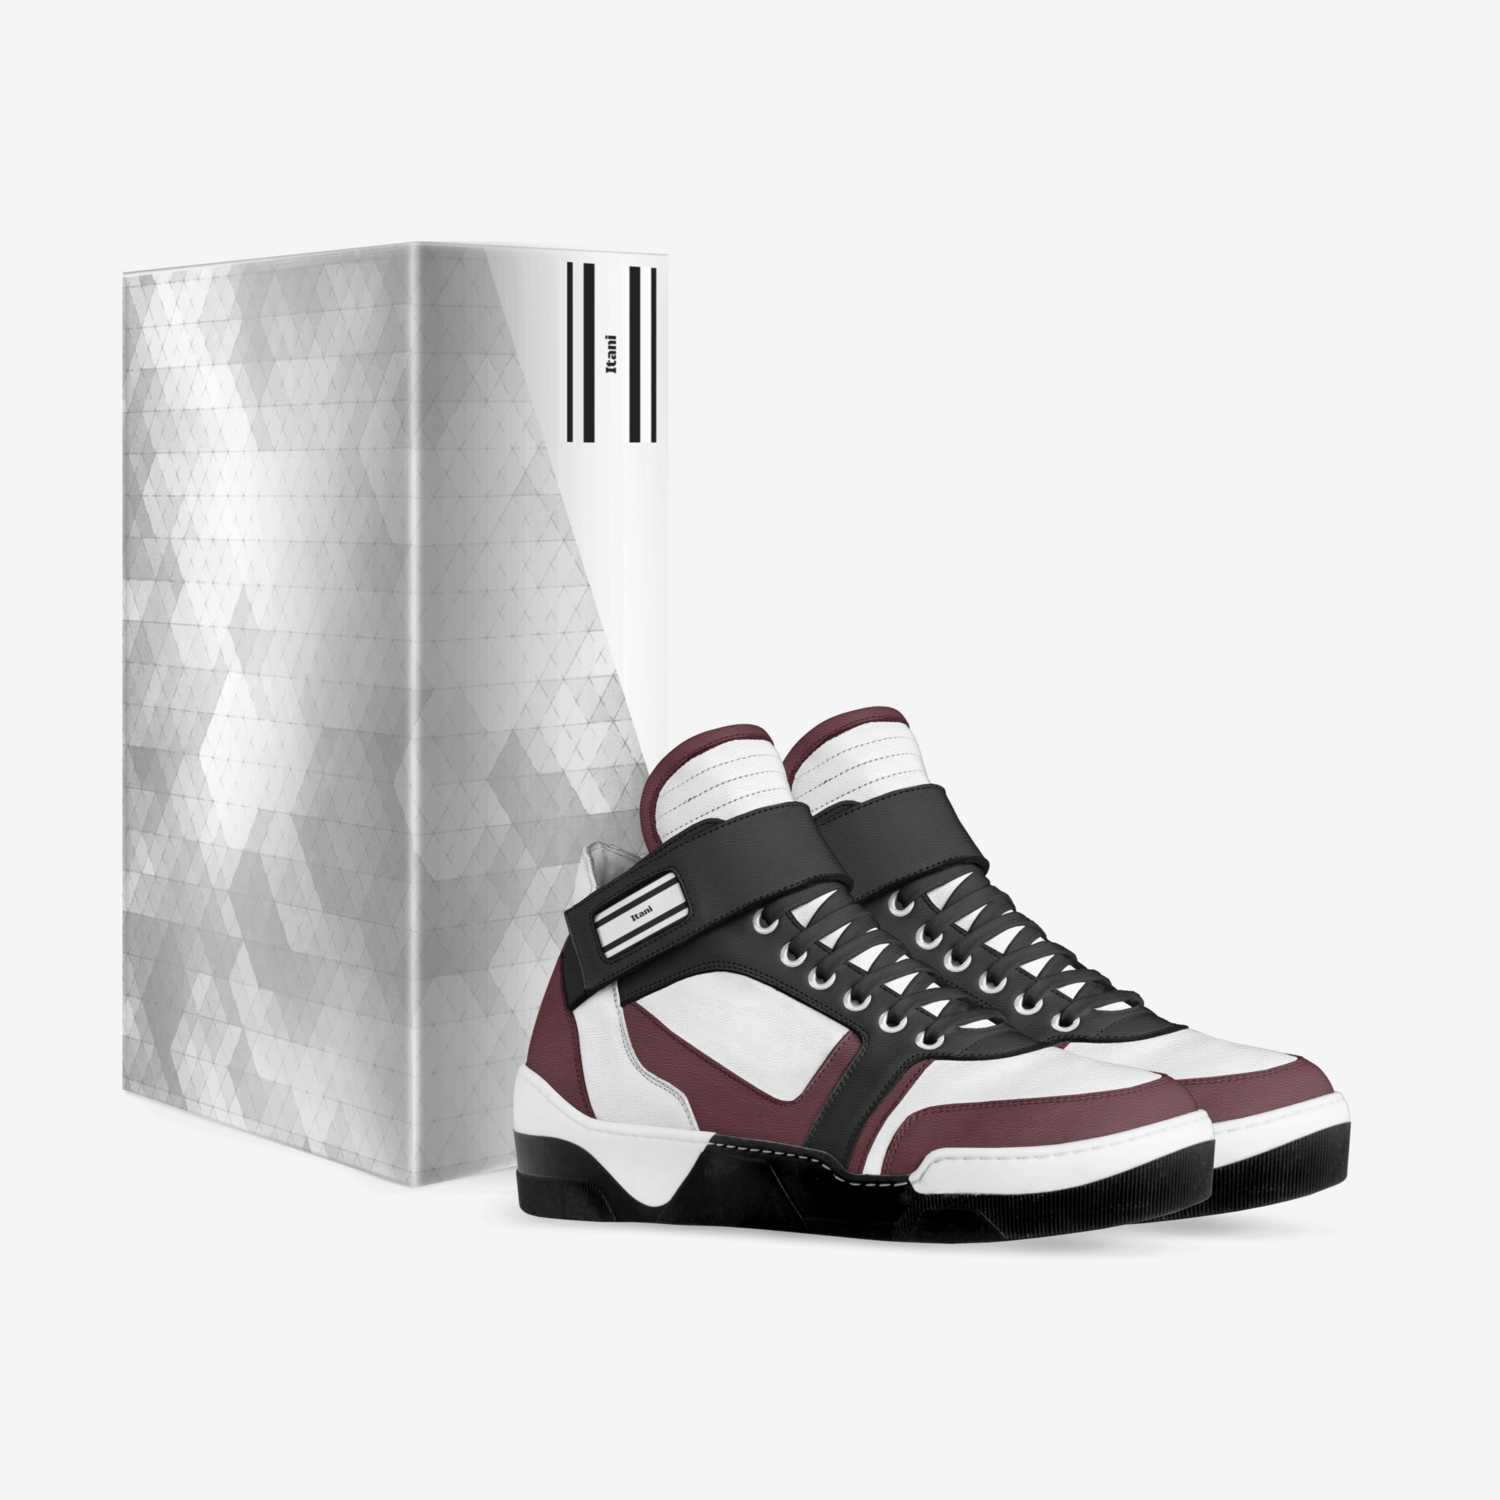 Itani custom made in Italy shoes by Amanda J. Itani | Box view